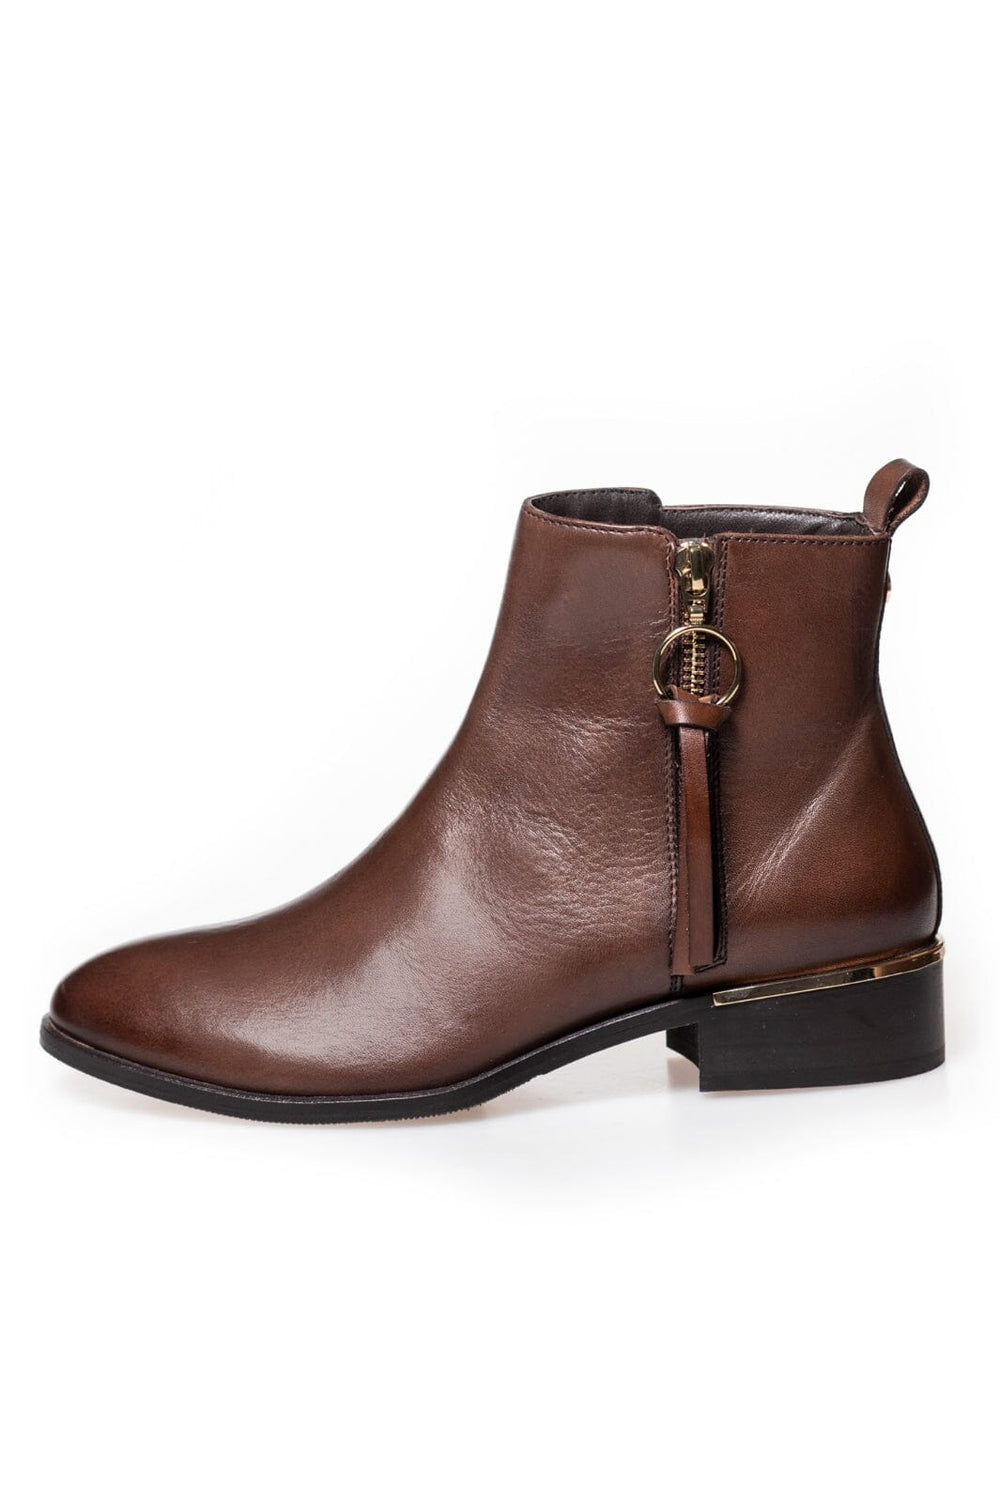 Copenhagen Shoes - Fever Leather 22 - 004 Dark Brown 